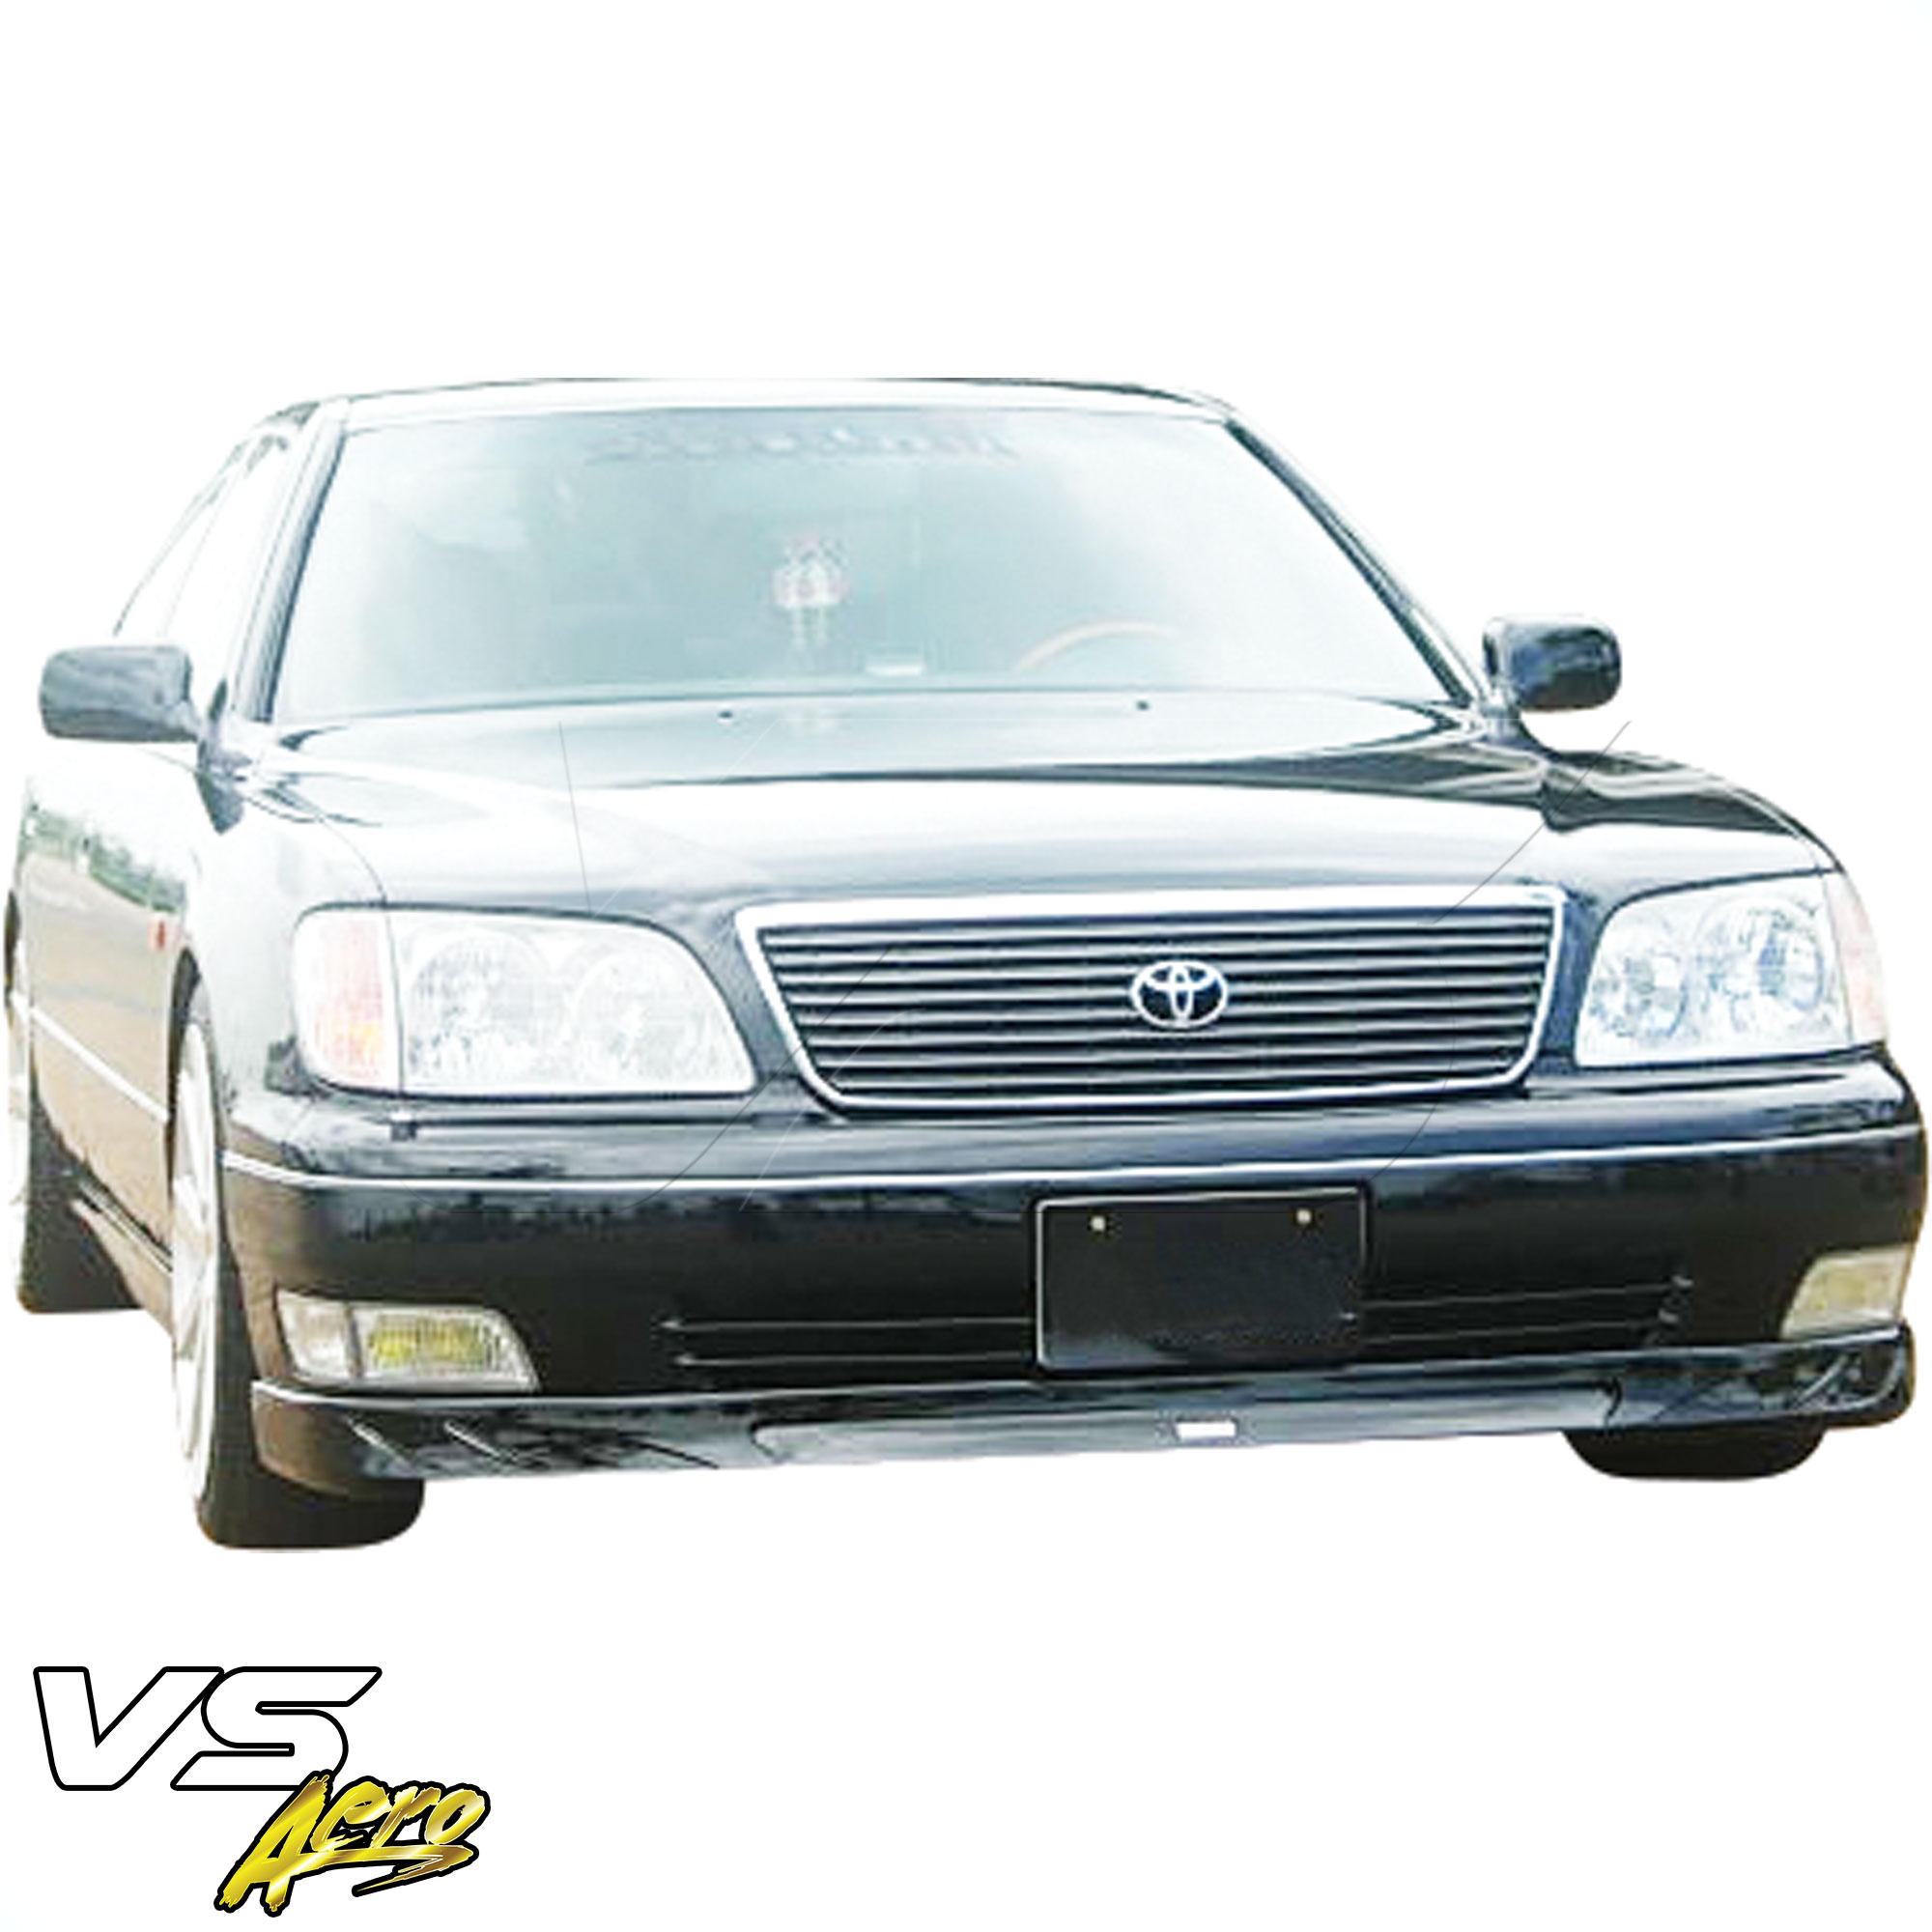 VSaero FRP FKON Front Lip Valance > Lexus LS400 UCF21 1998-2000 - Image 10